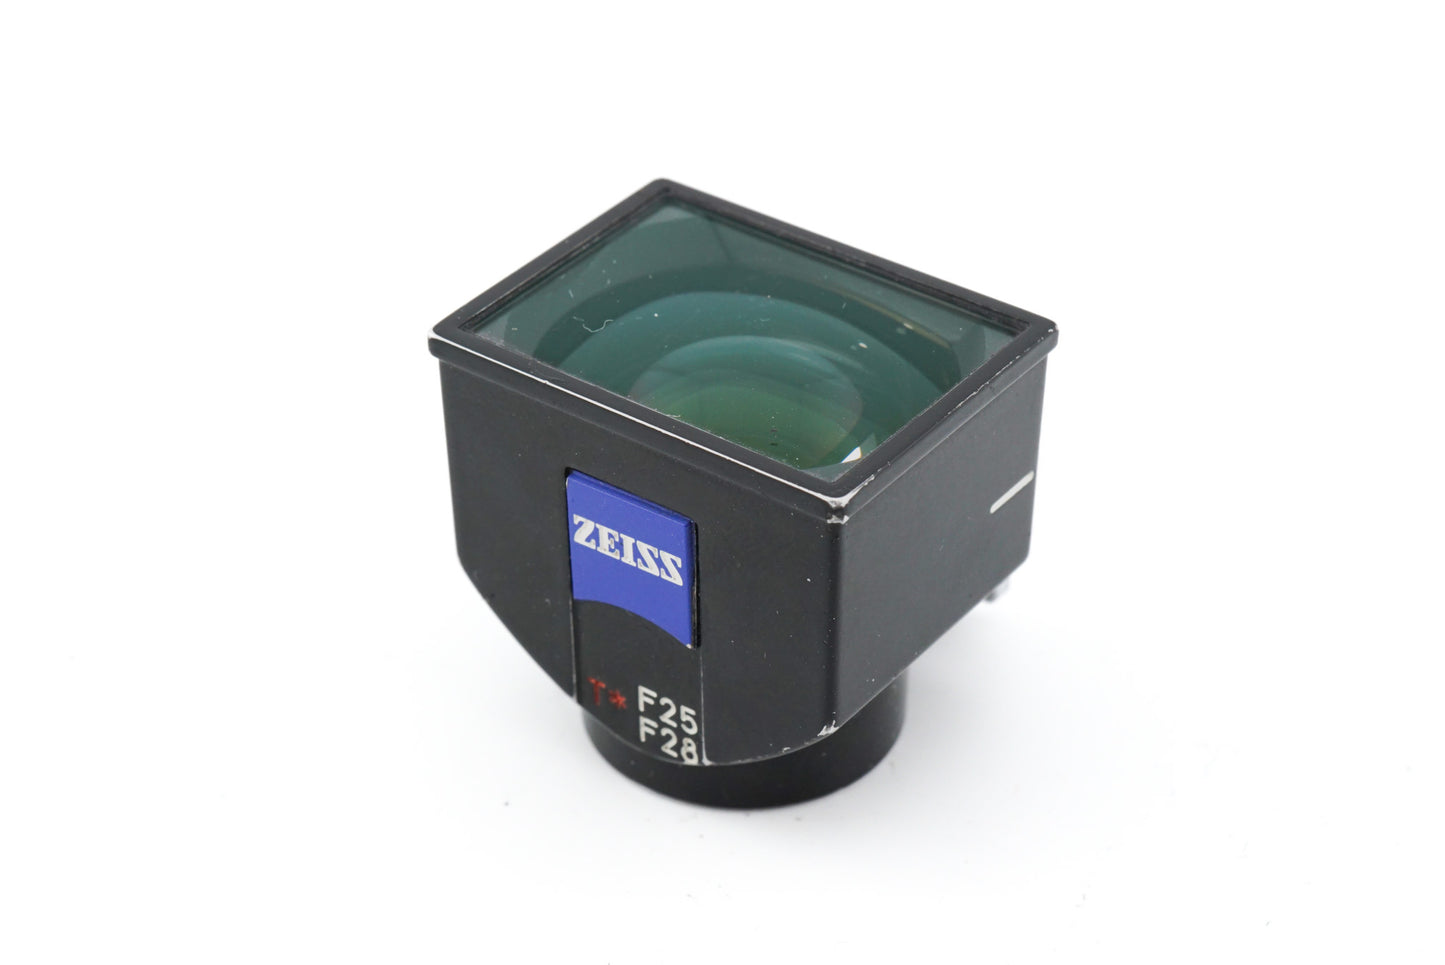 Carl Zeiss 25mm f2.8 Biogon T* ZM + Lens Hood for 21mm f2.8 / 25mm f2.8 ZM + ZI Optical Viewfinder for 25/28mm Lens